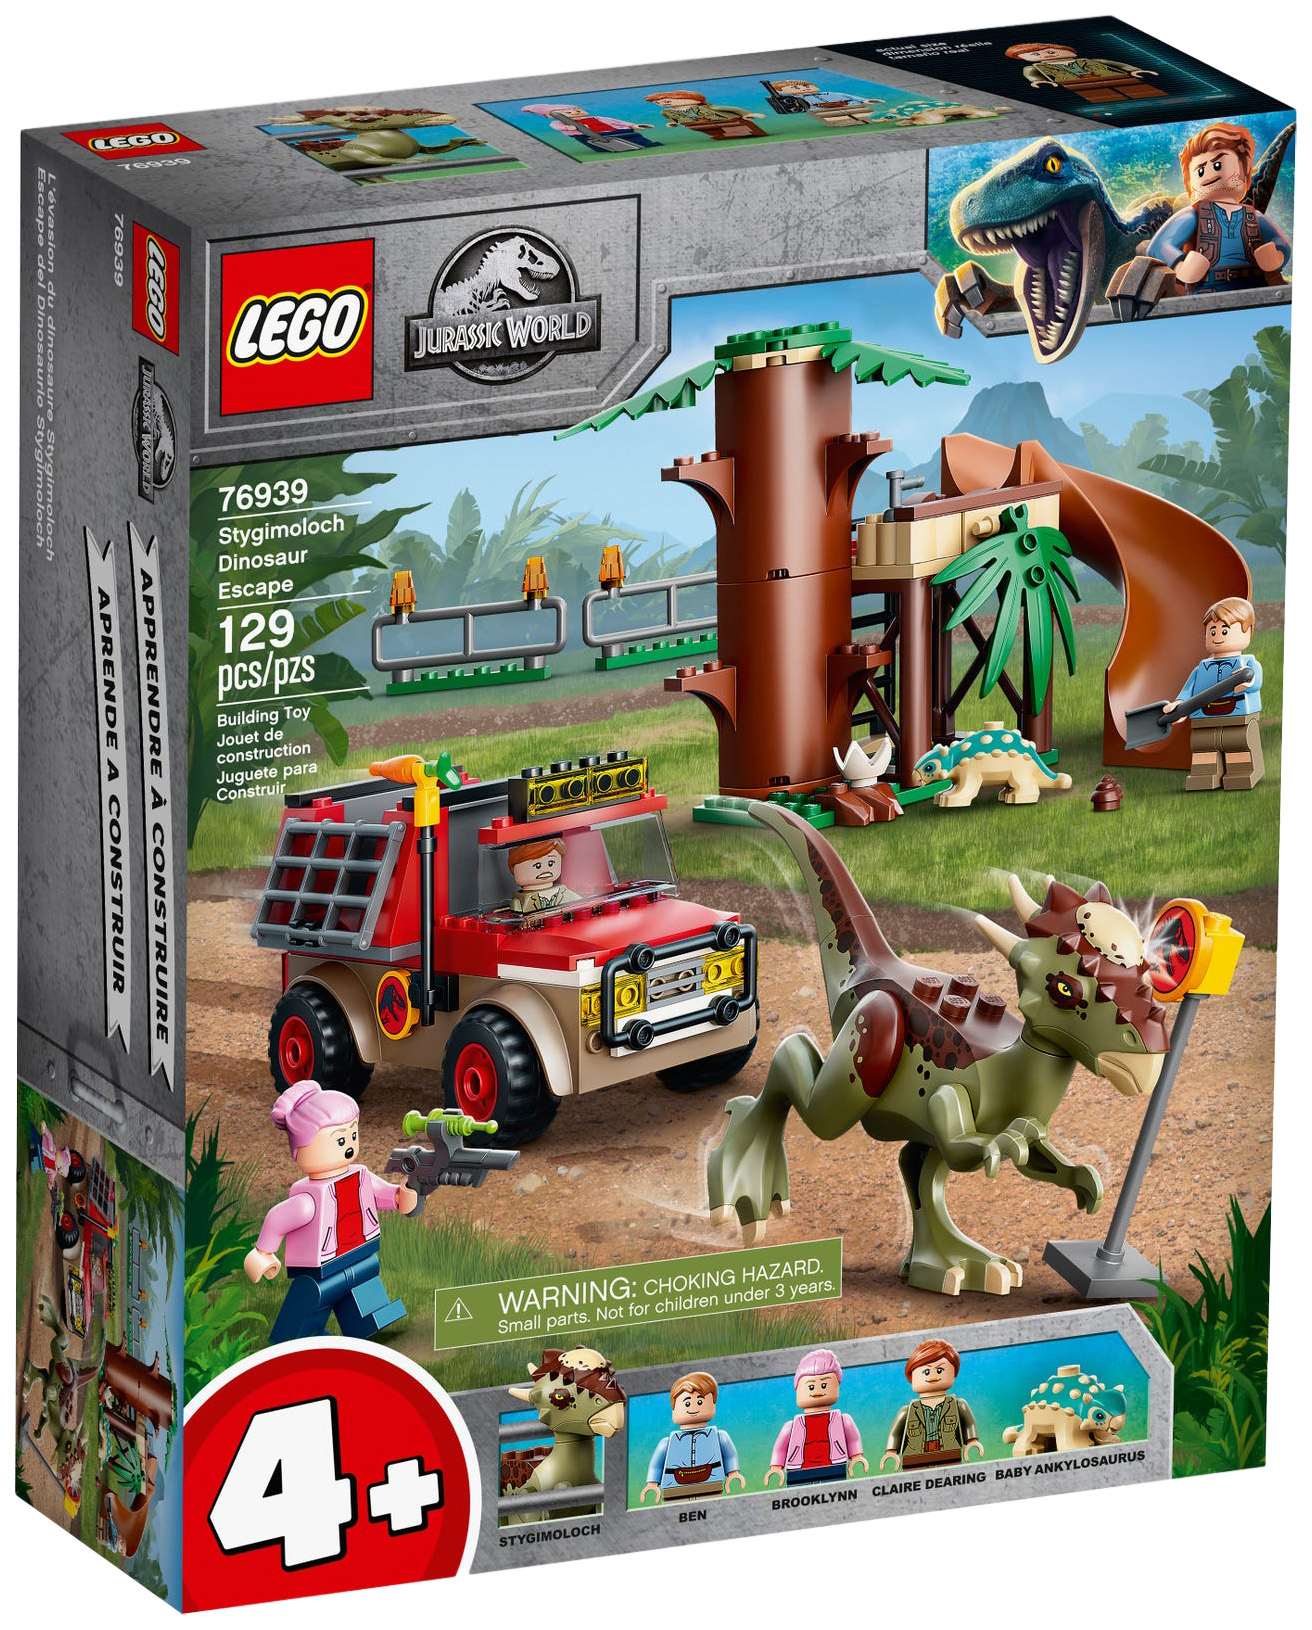 Конструктор LEGO Jurassic World 76939 Побег стигимолоха конструктор lego jurassic world побег стигимолоха 76939